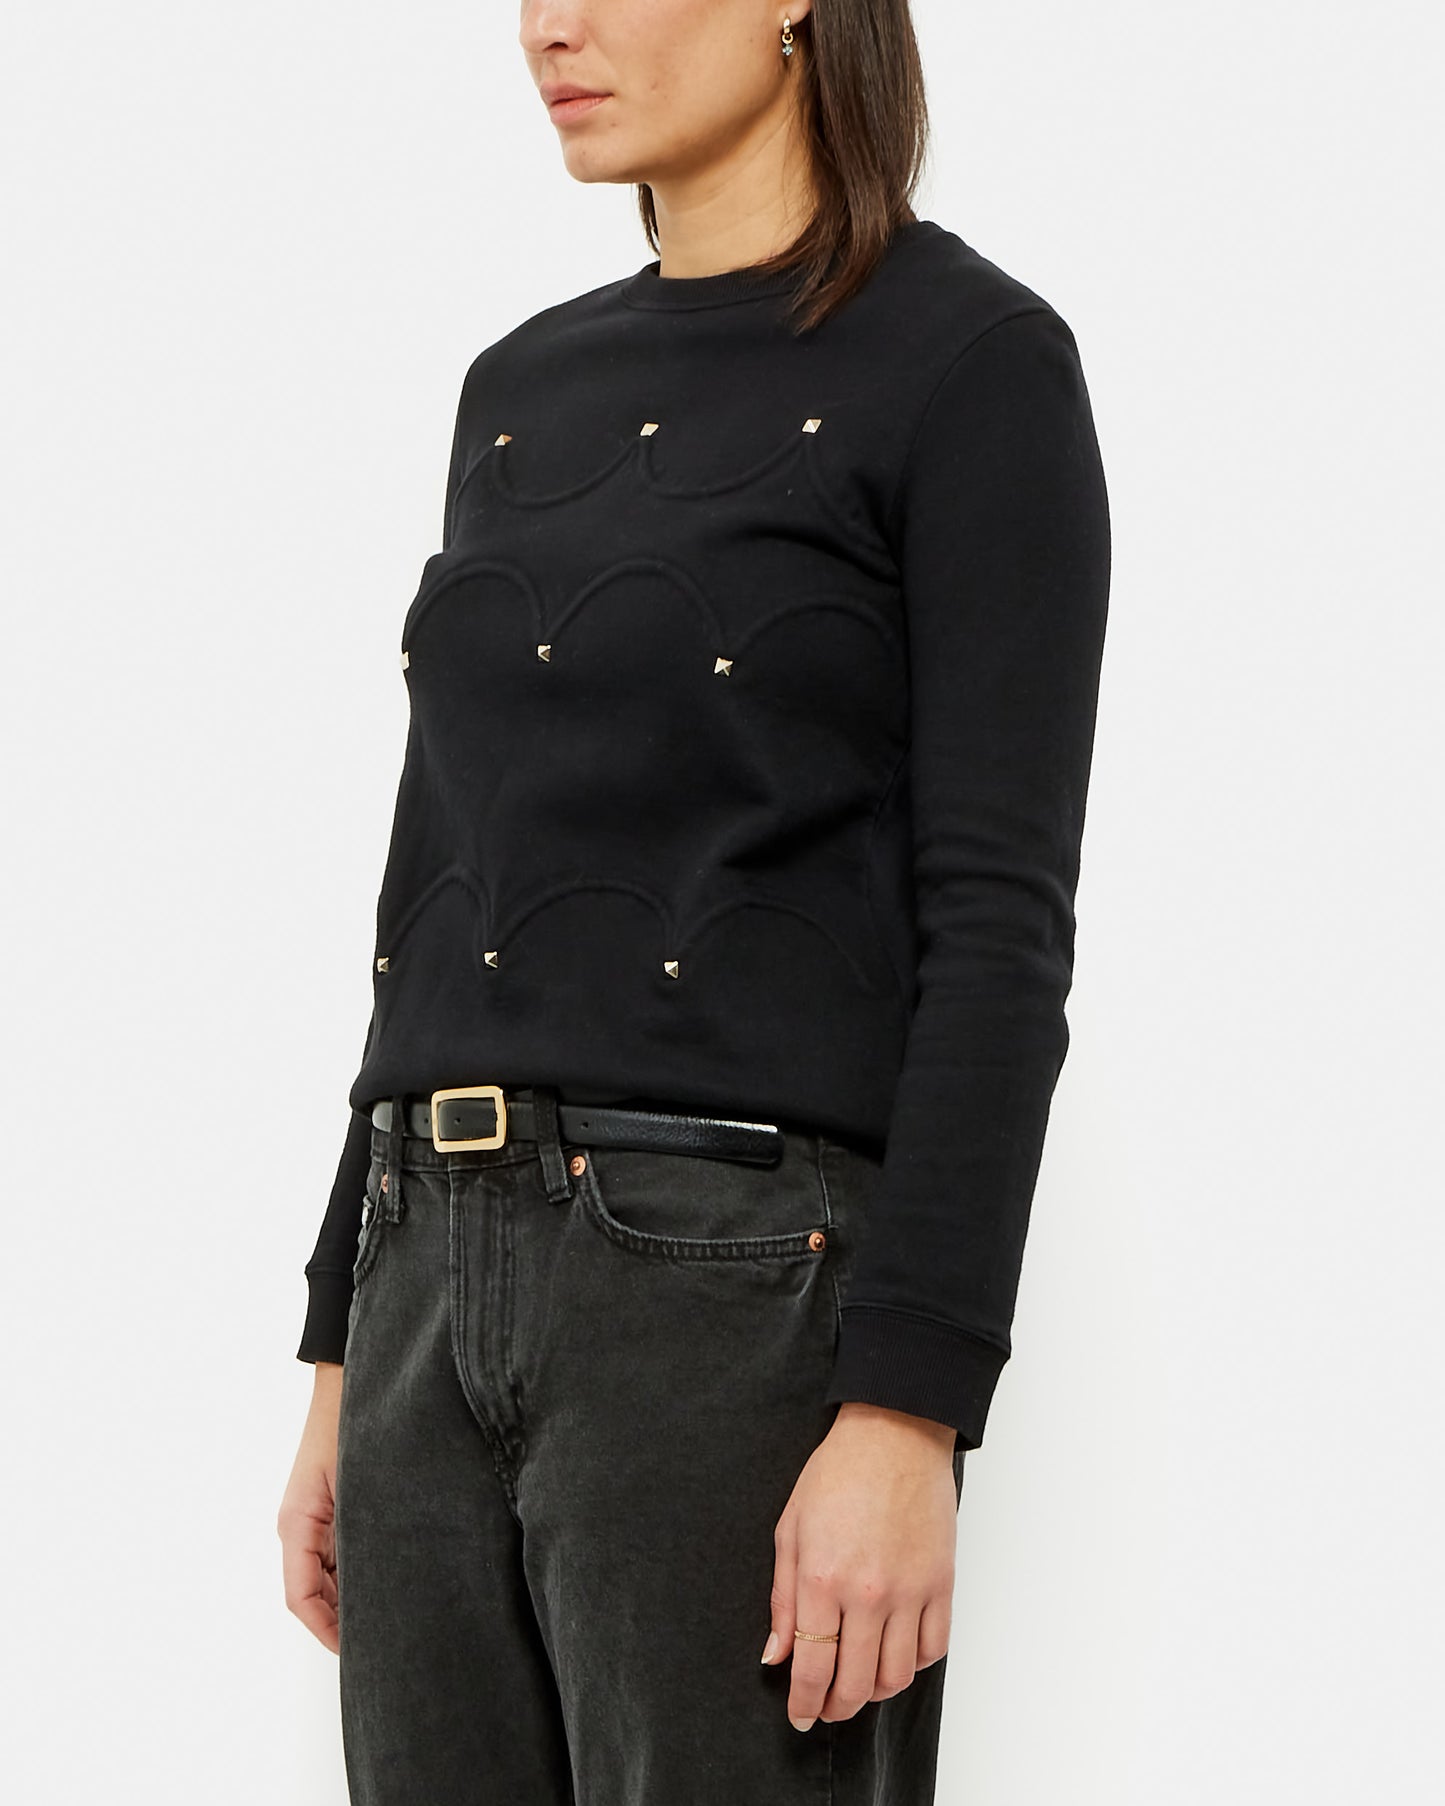 Valentino Black Cotton Studded Sweater - XS